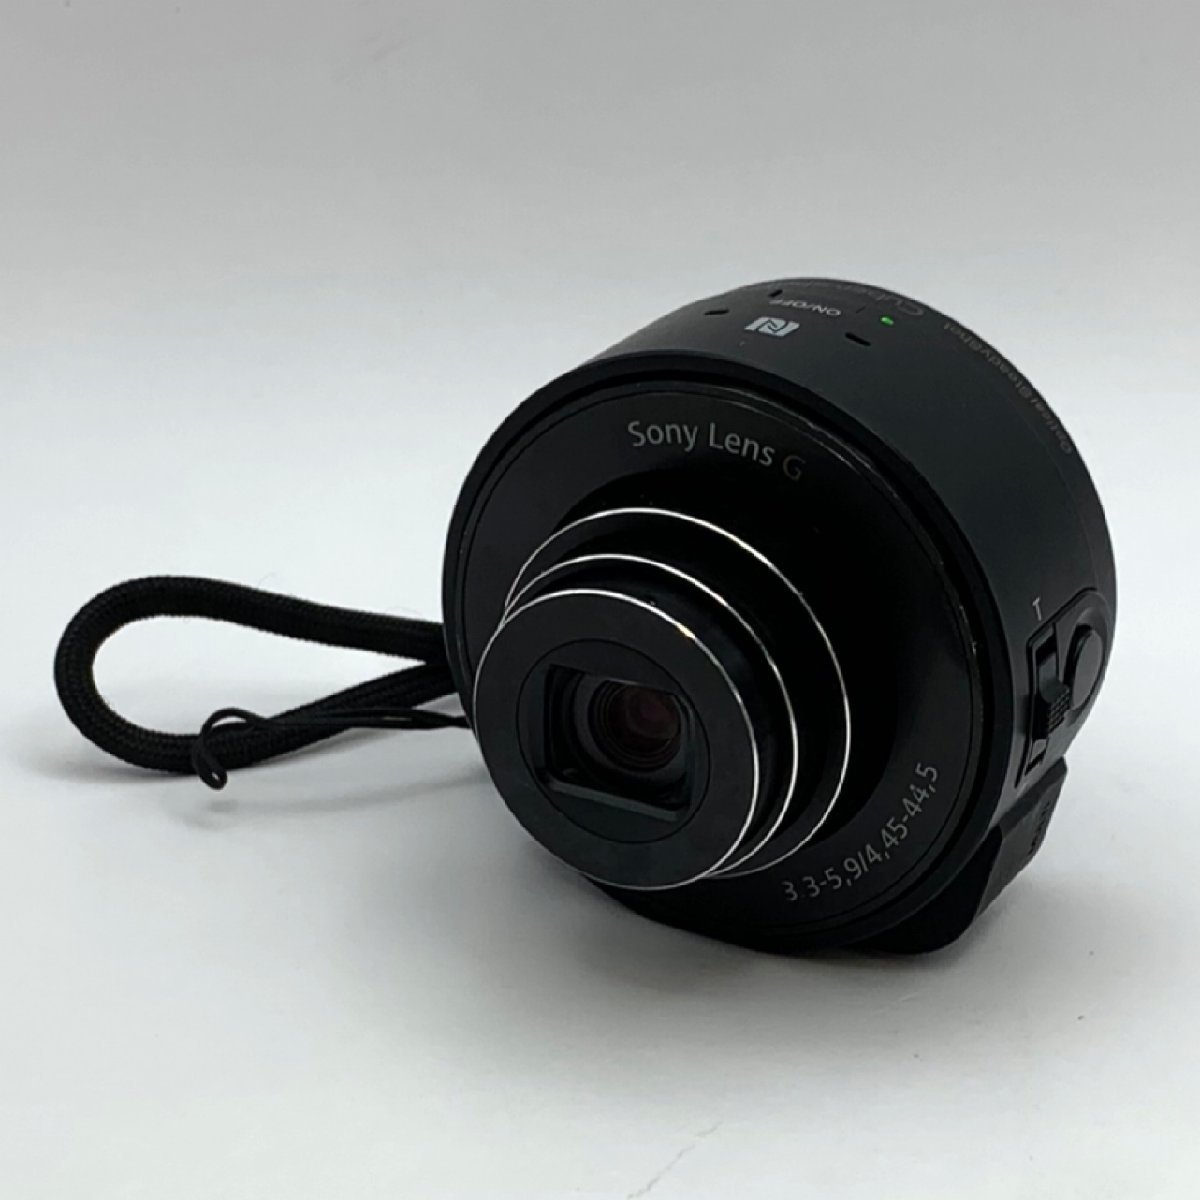 SONY デジタルカメラ Cyber-shot レンズスタイルカメラ QX10 ホワイト